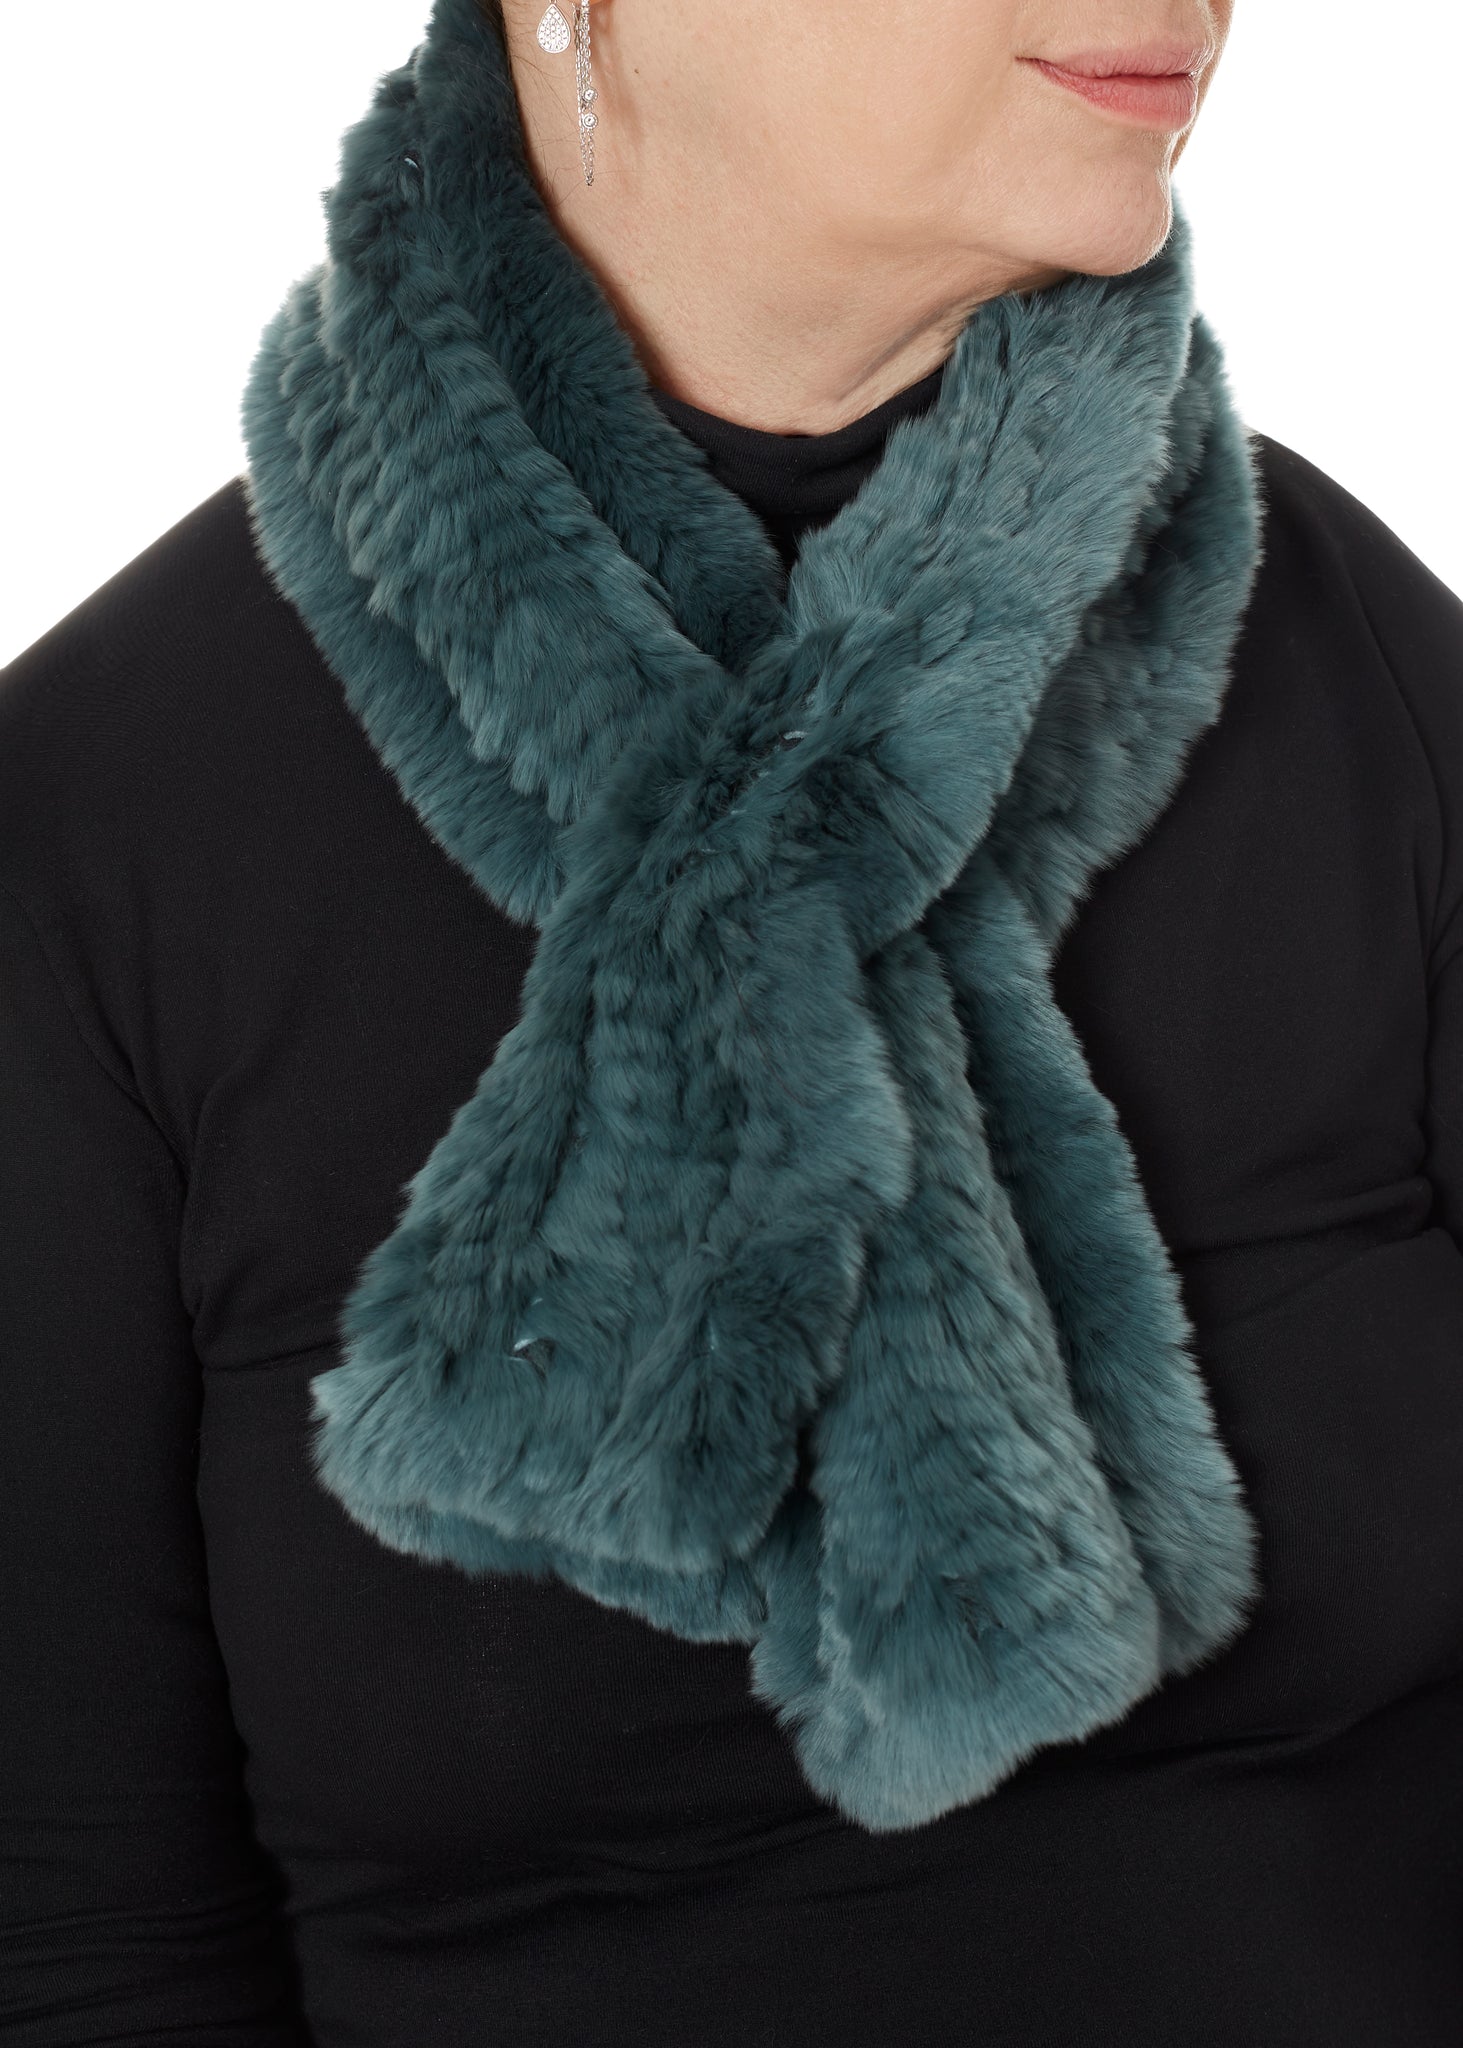 Teal Knitted Rex Rabbit 'Loop' Designer Fur Scarf - Jessimara